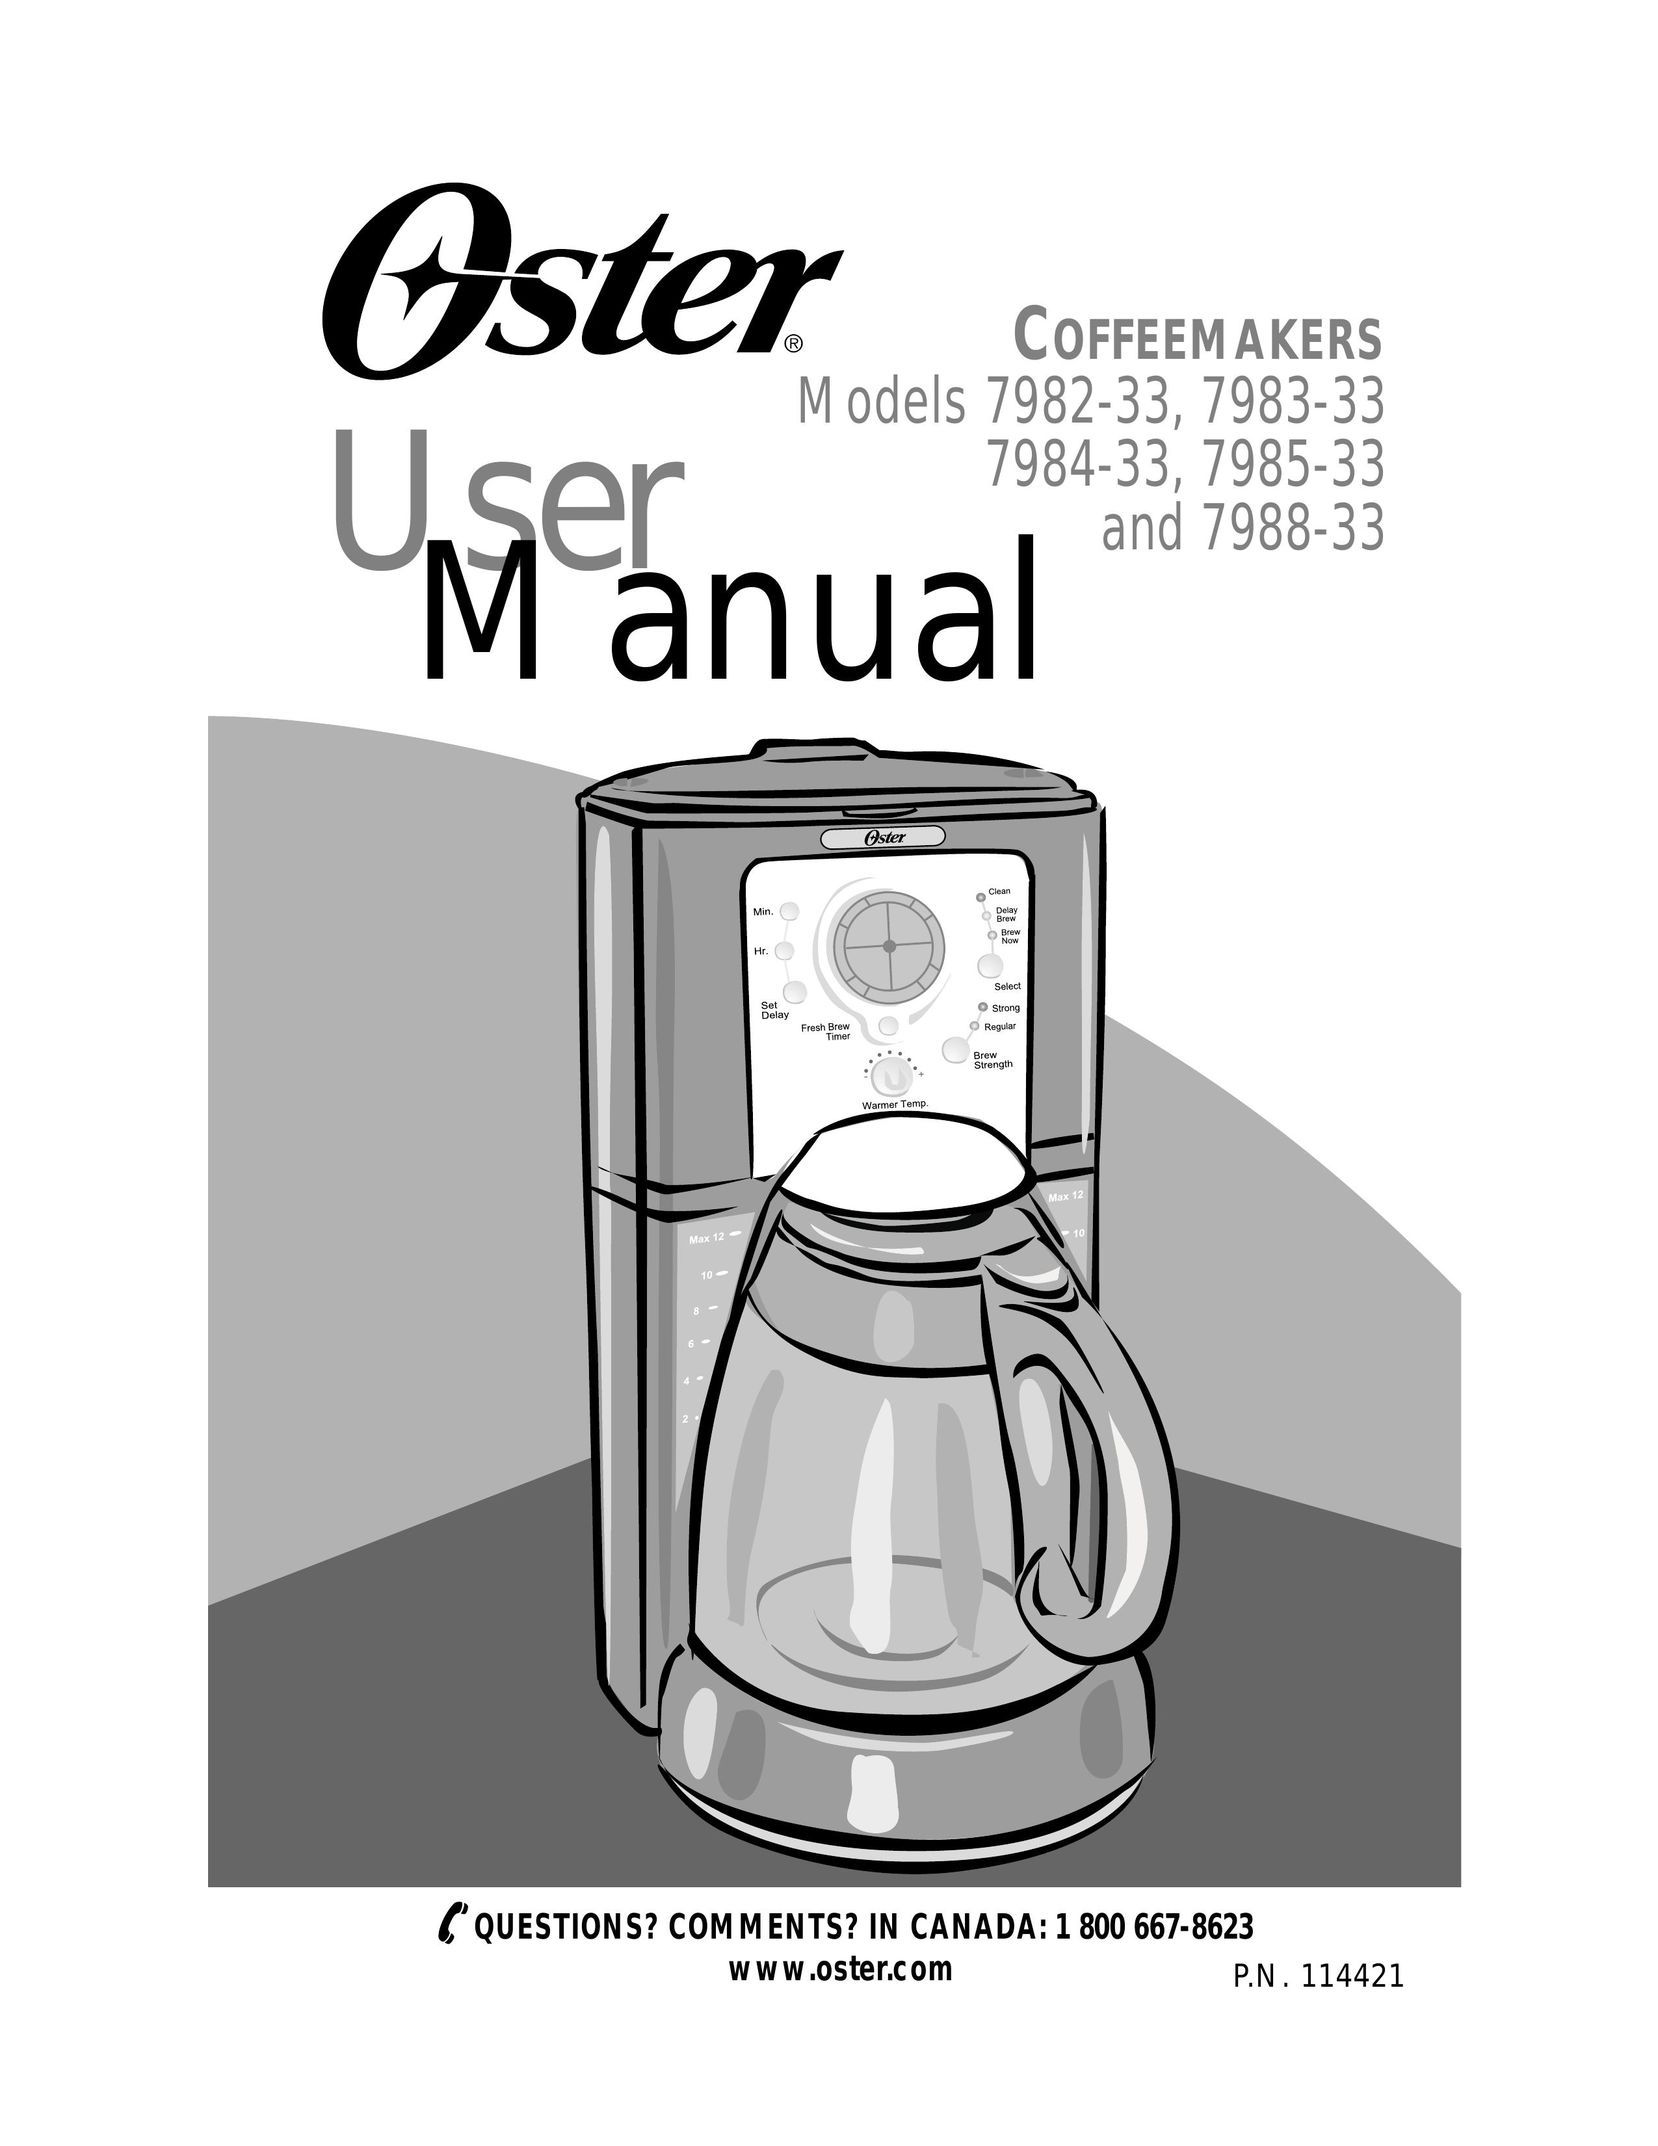 Mr. Coffee 7983-33 Coffeemaker User Manual